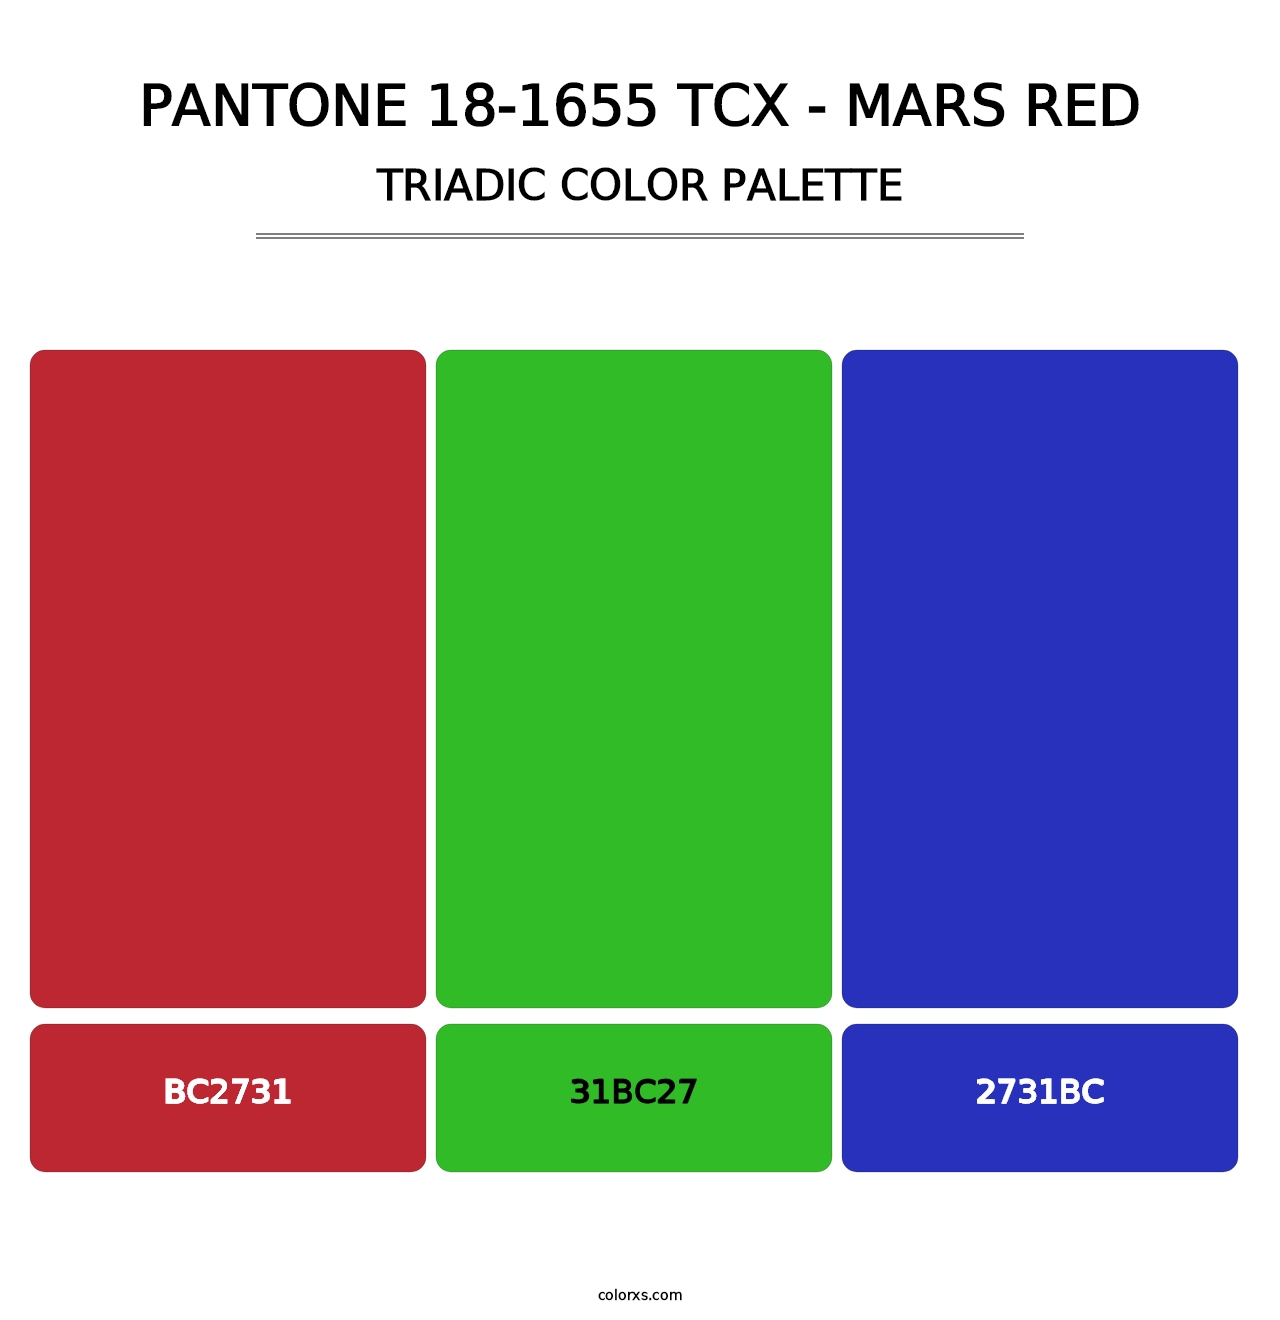 PANTONE 18-1655 TCX - Mars Red - Triadic Color Palette